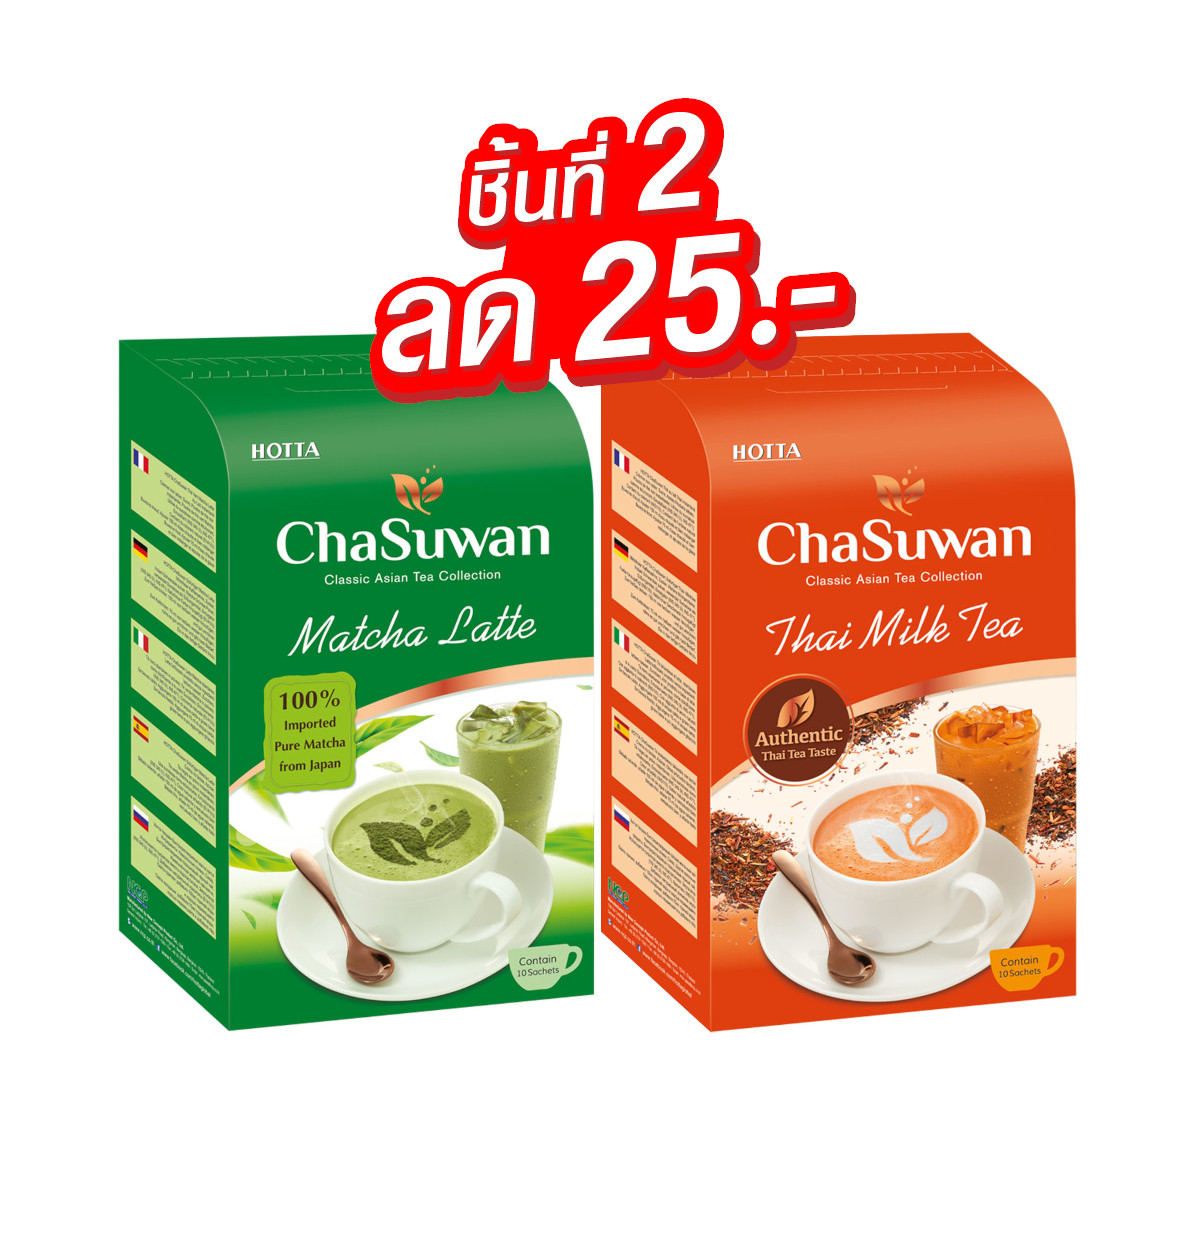 [Buy 2 Get 25.- Off] HOTTA Chasuwan x 2